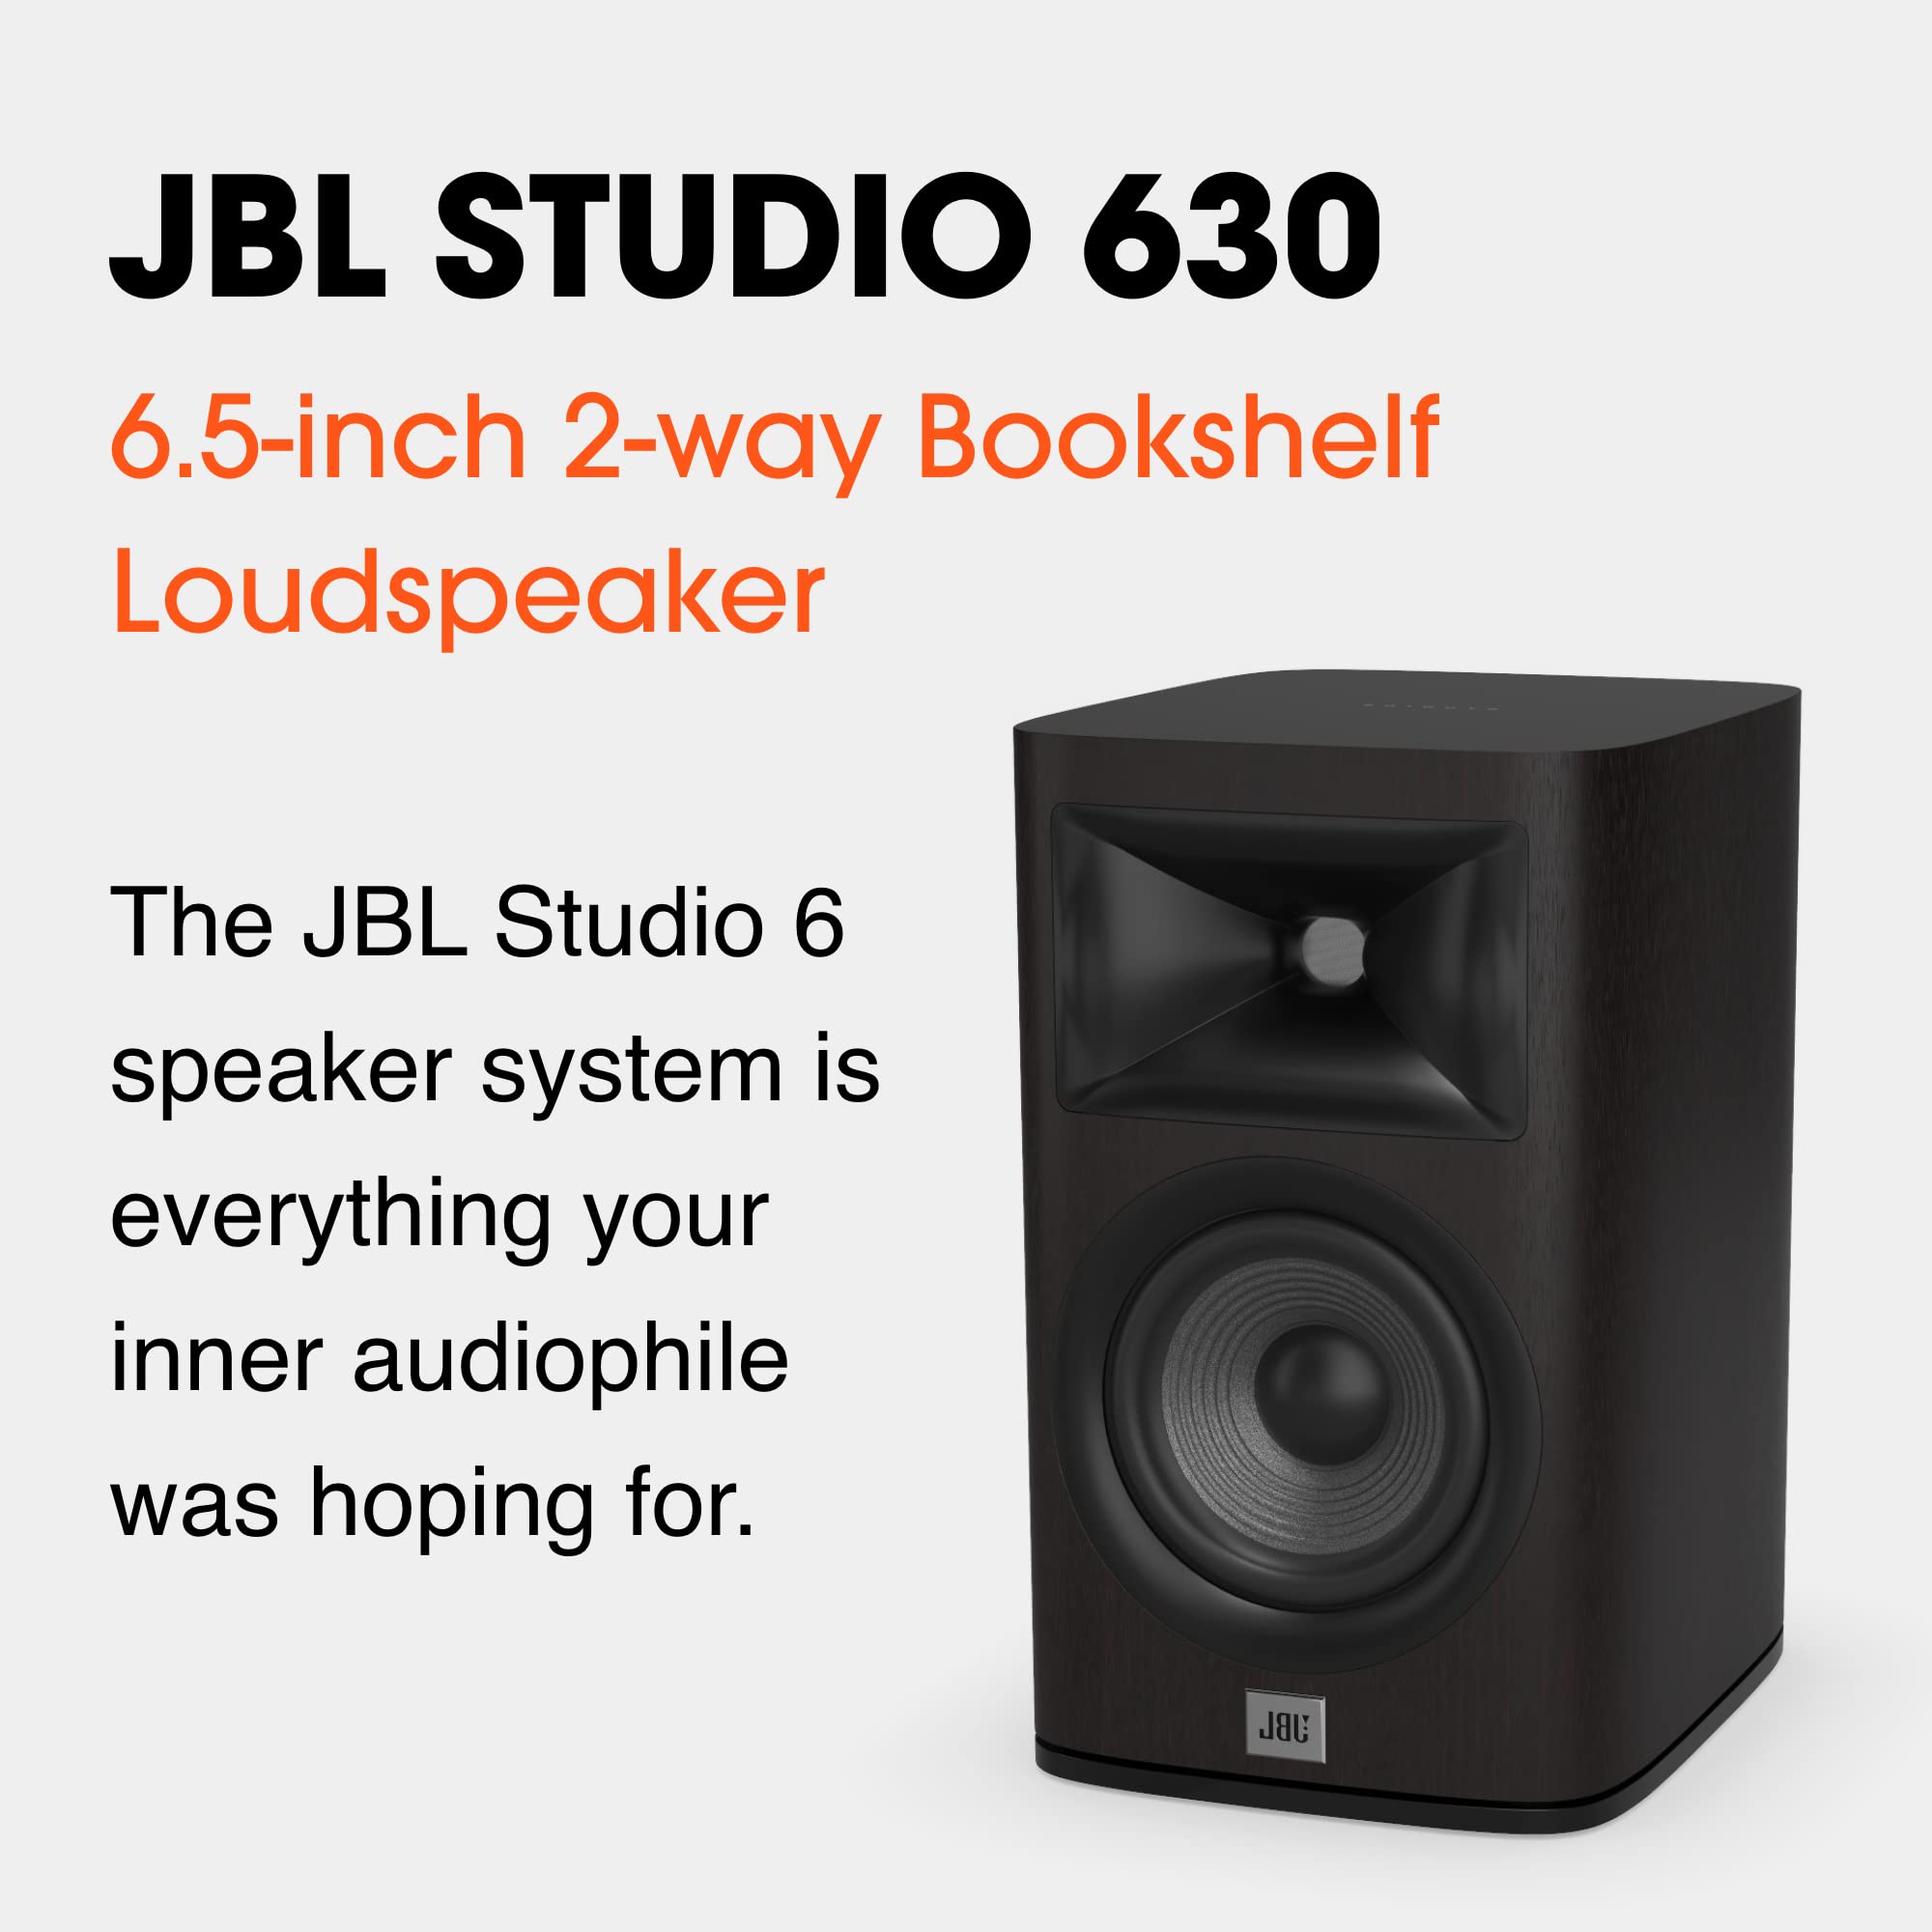 JBL Studio 630, Dark Wood - High-Performance Bookshelf Loudspeaker - with 6.5” PolyPlas Cone Woofer, 2414H-1 Compression Driver & Magnetic Grille